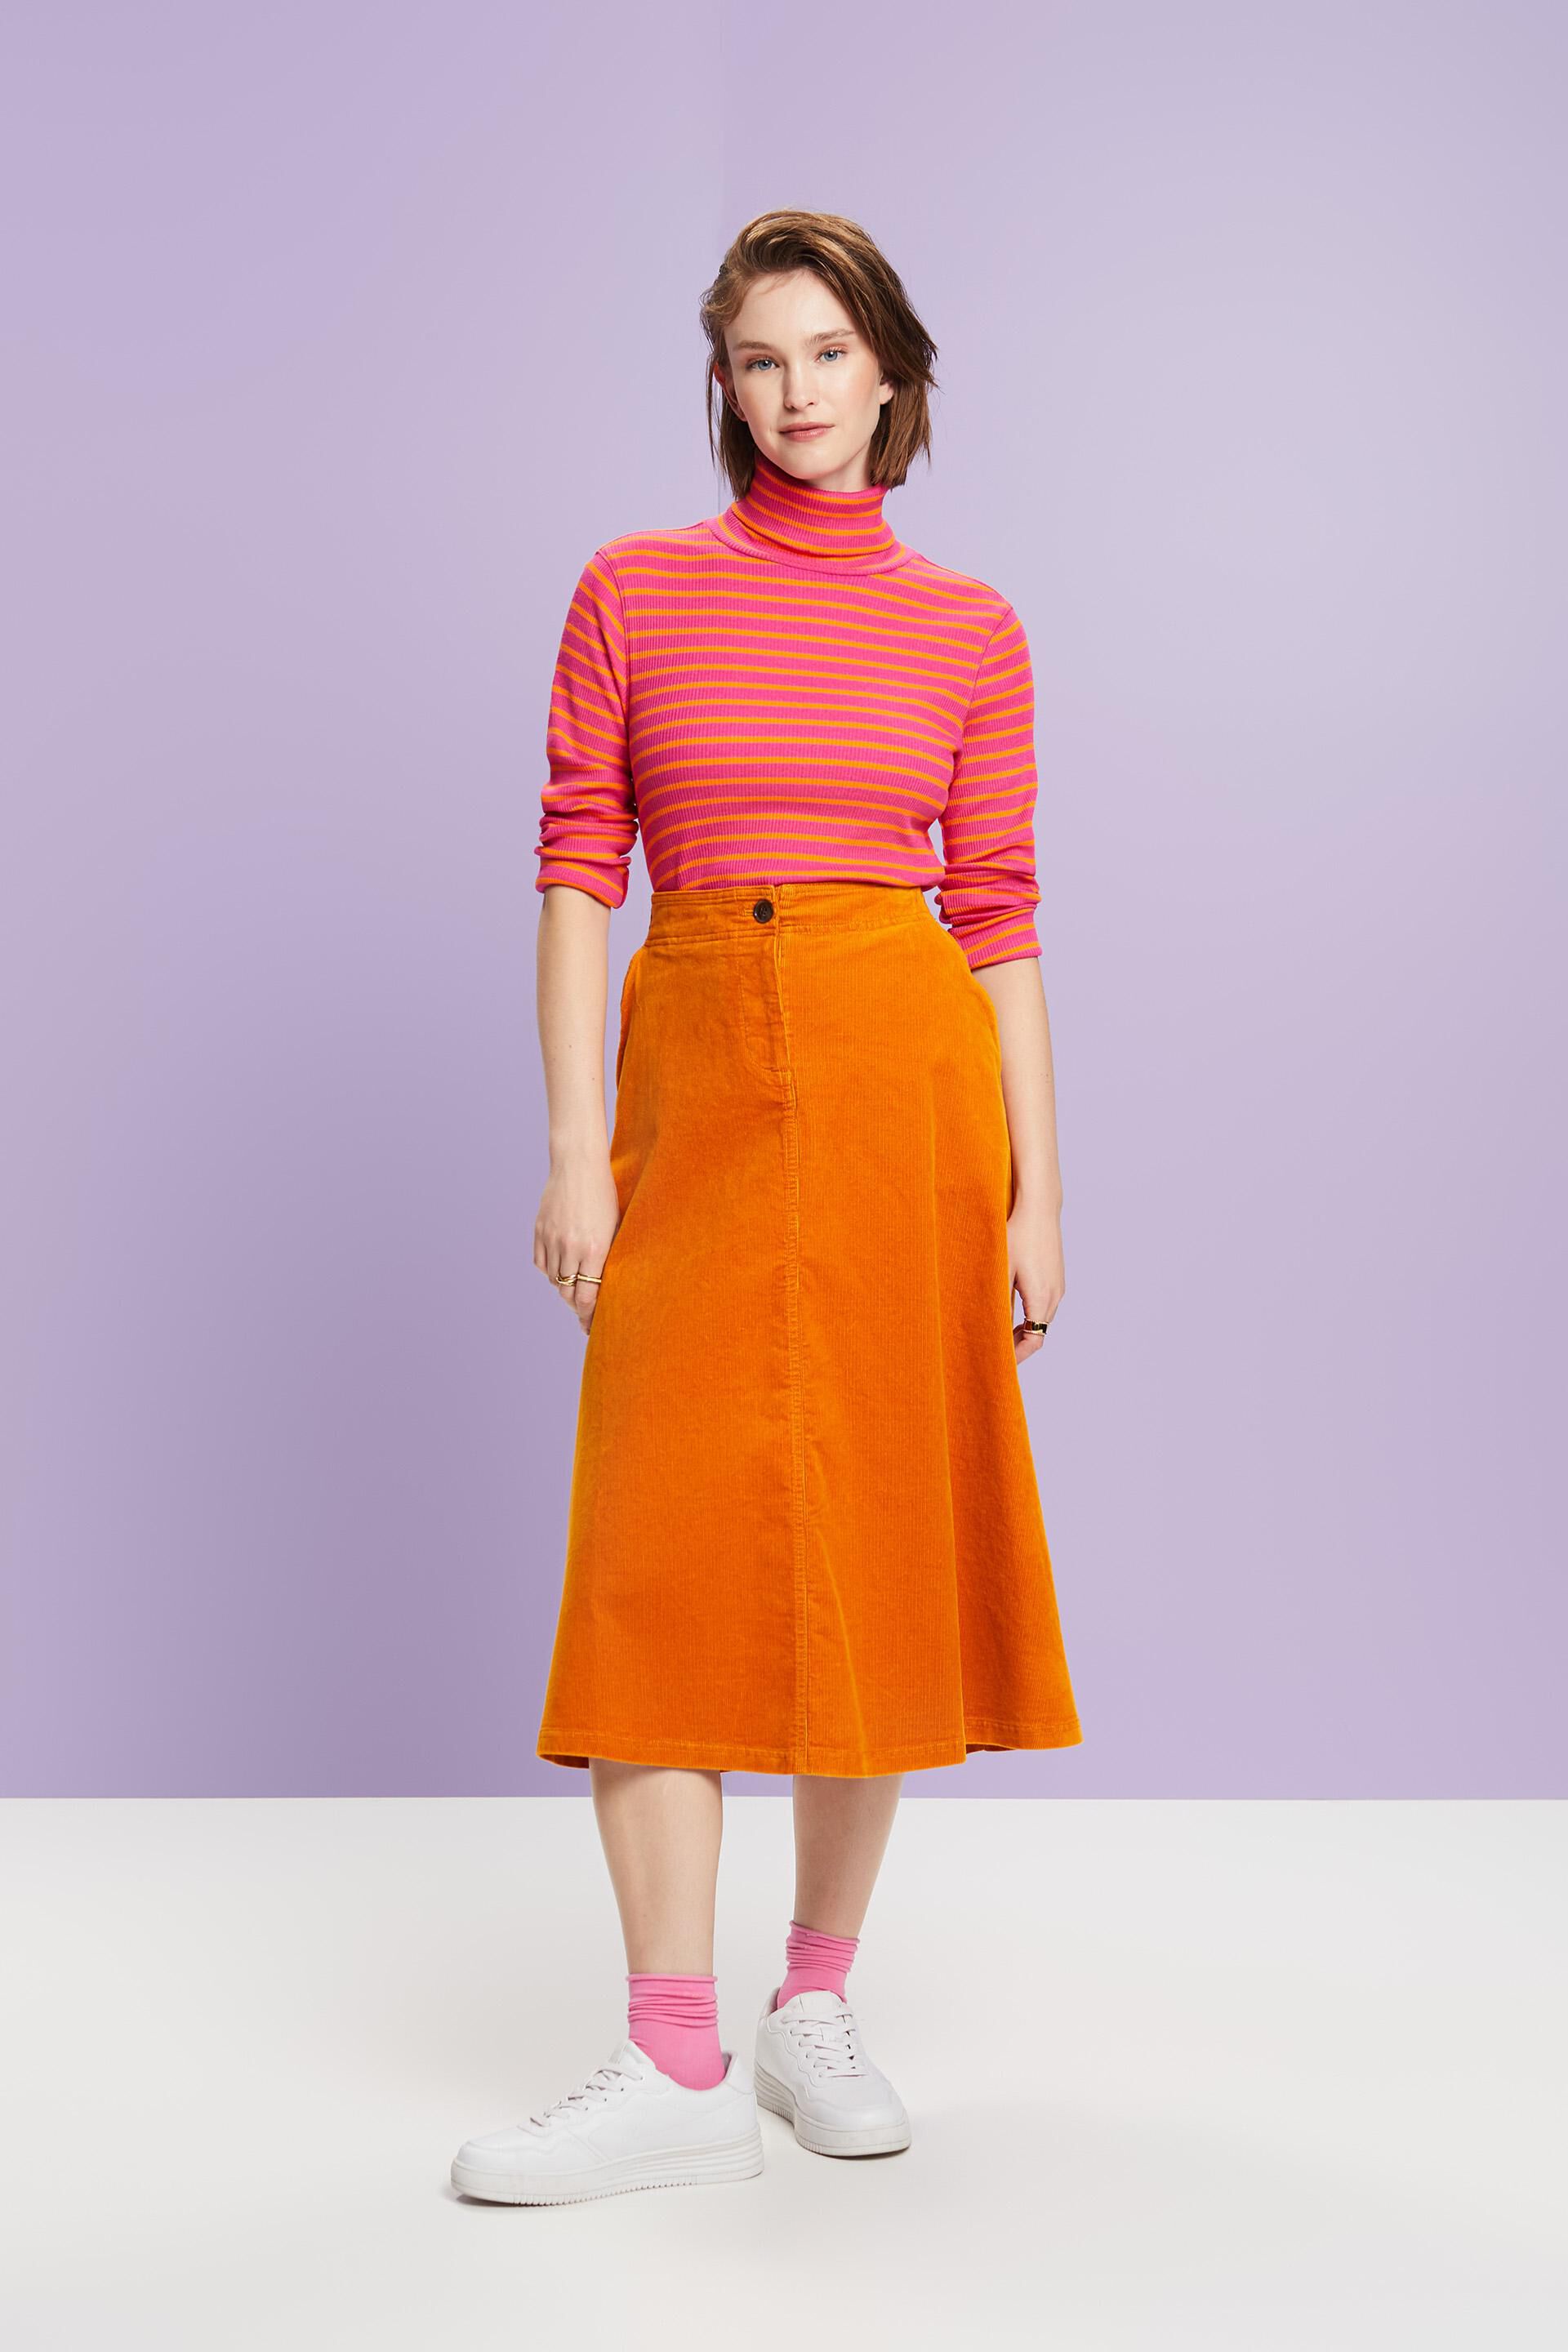 ESPRIT - Long-Sleeve Turtleneck Sweater at our online shop